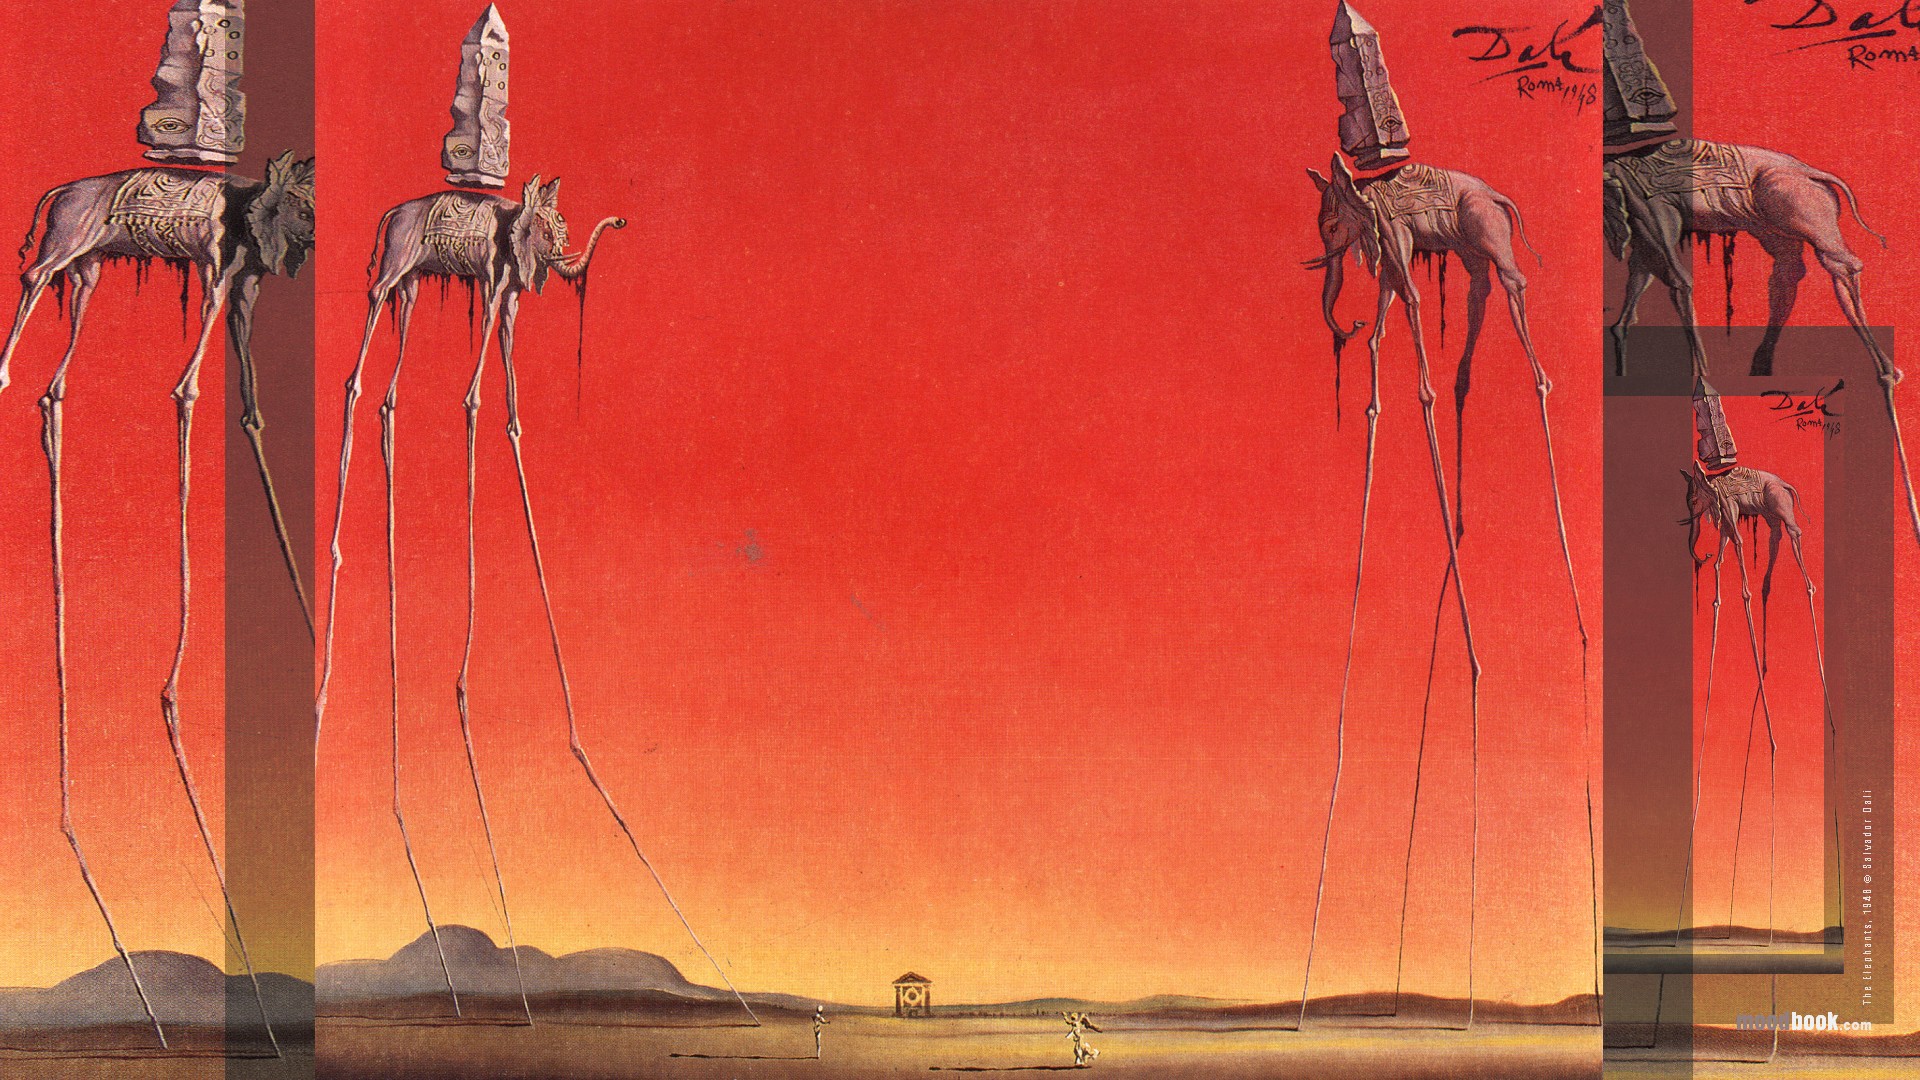 Les Elephants Salvador Dali S Surreal Painting